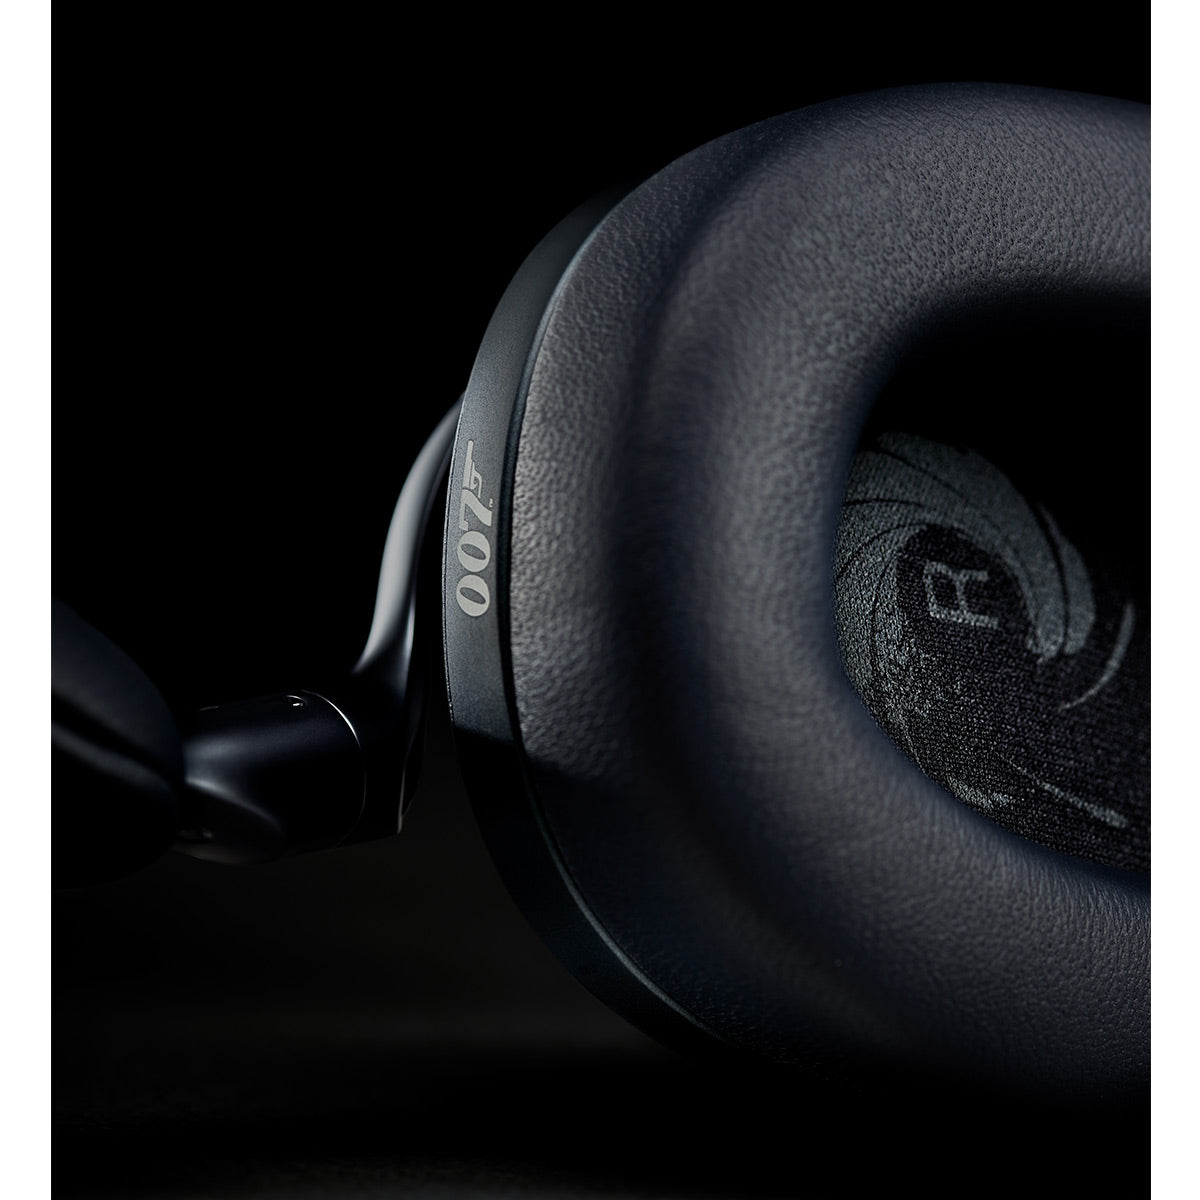 Bowers & Wilkins PX8 Wireless Over-Ear Headphones - James Bond